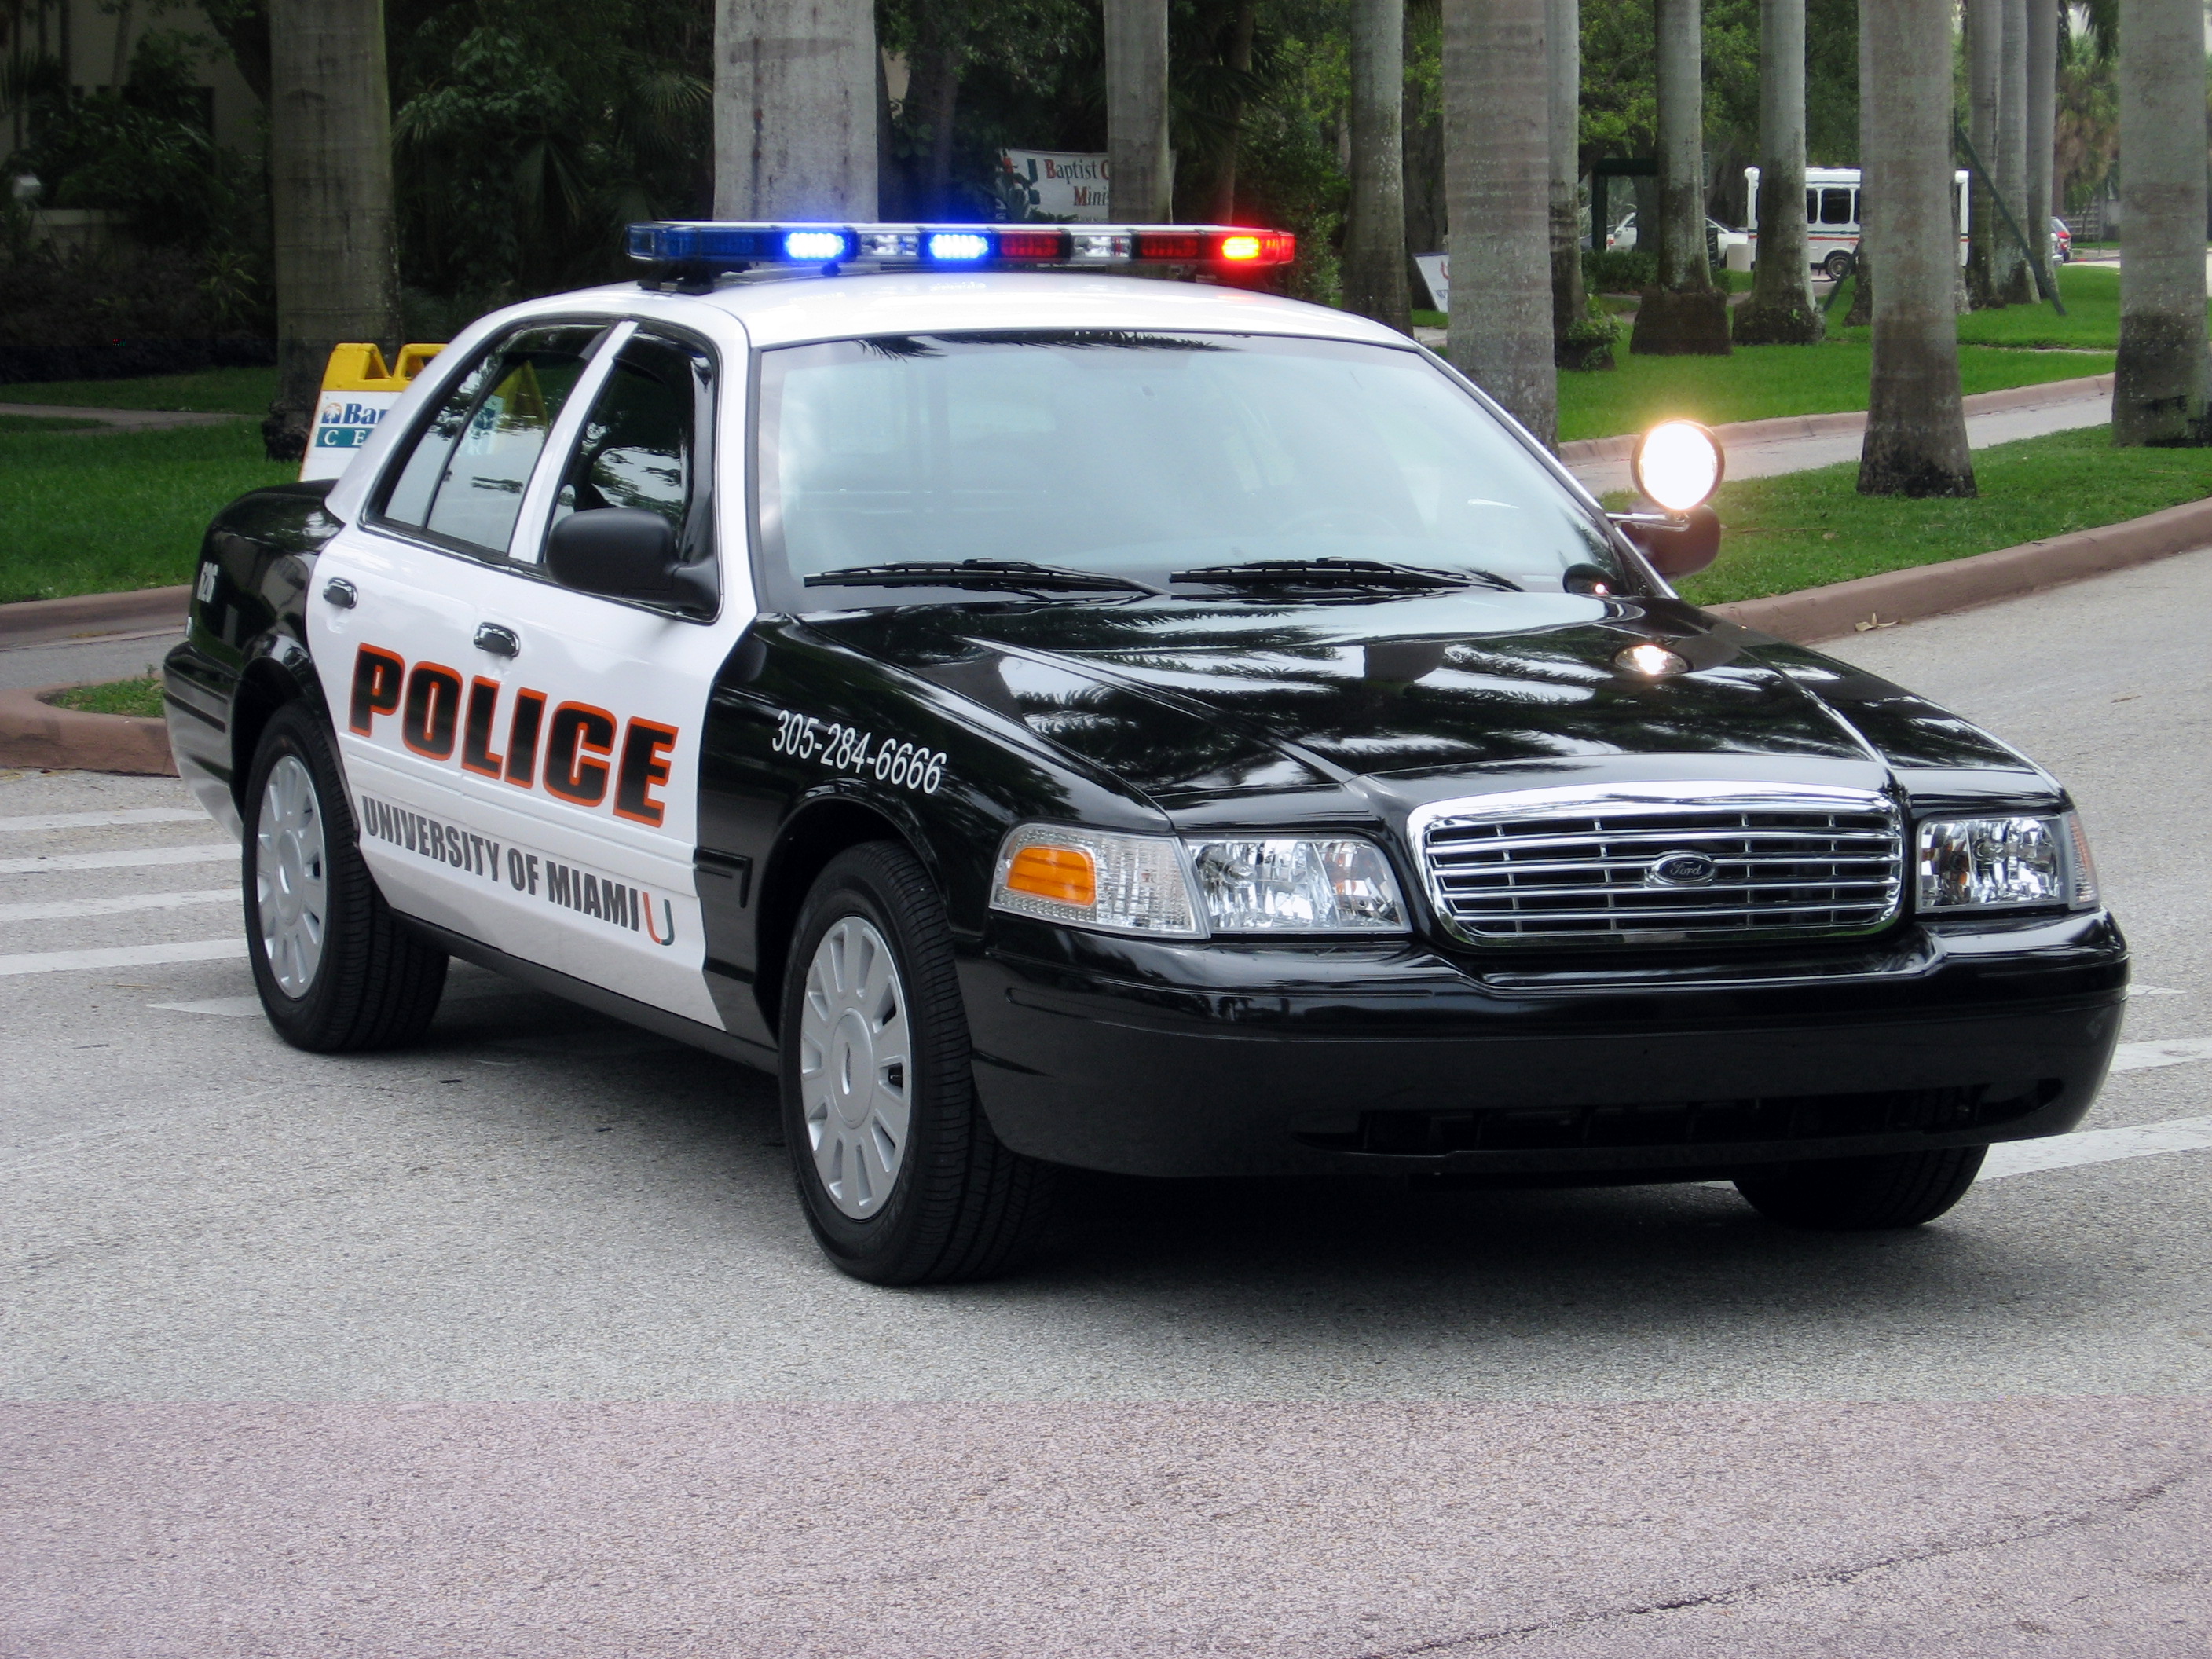 Покажи картинки полицейских. Chevrolet Caprice 2006 Police. Шевроле Каприс 2006 полиция. 2006 Ford Crown Victoria Police Interceptor. Ford Crown Victoria 911.